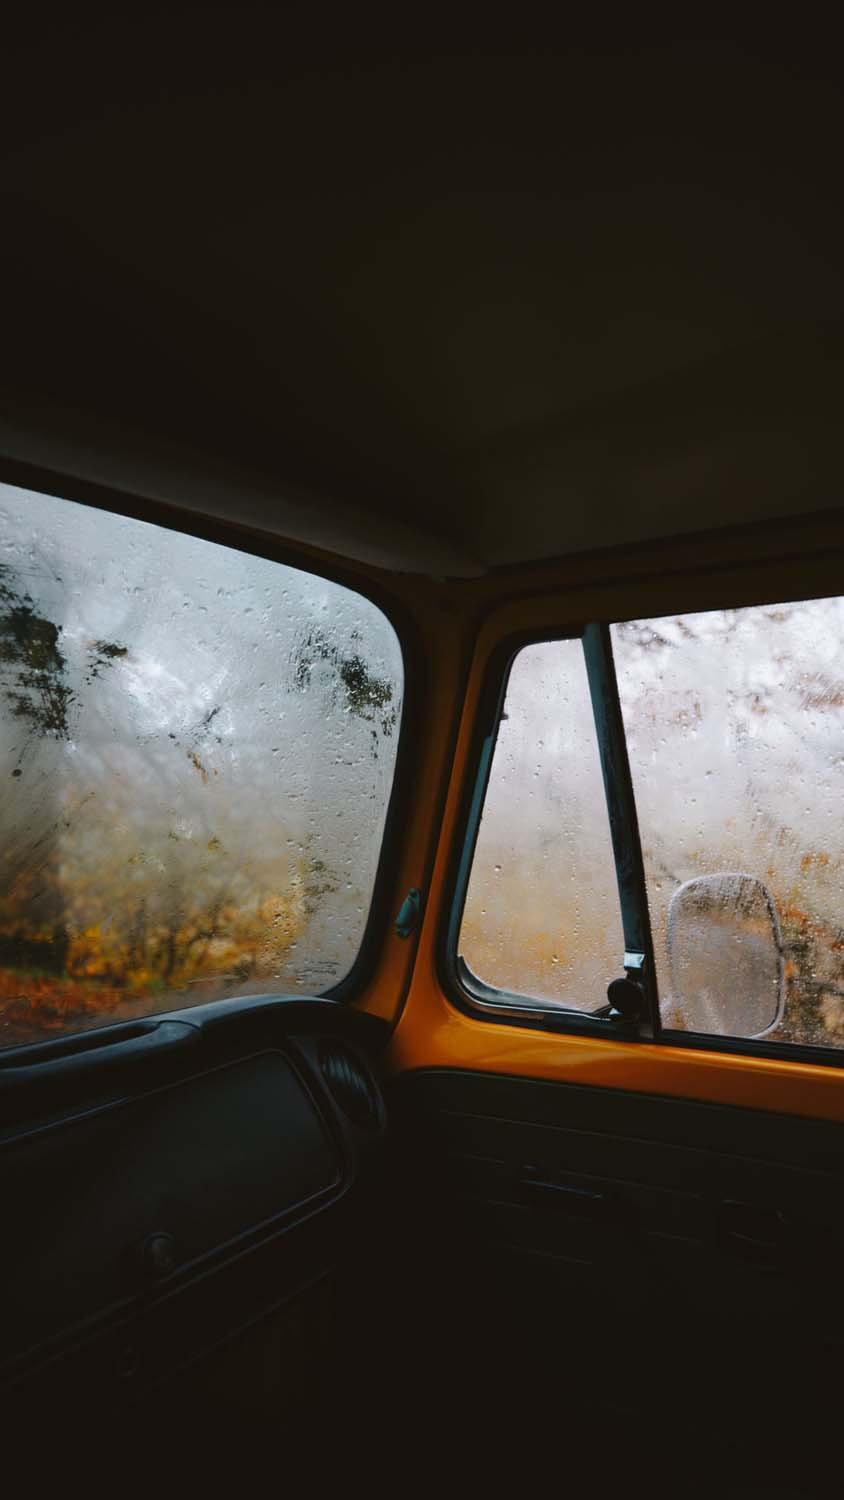 Car Window Mist IPhone Wallpaper HD  IPhone Wallpapers